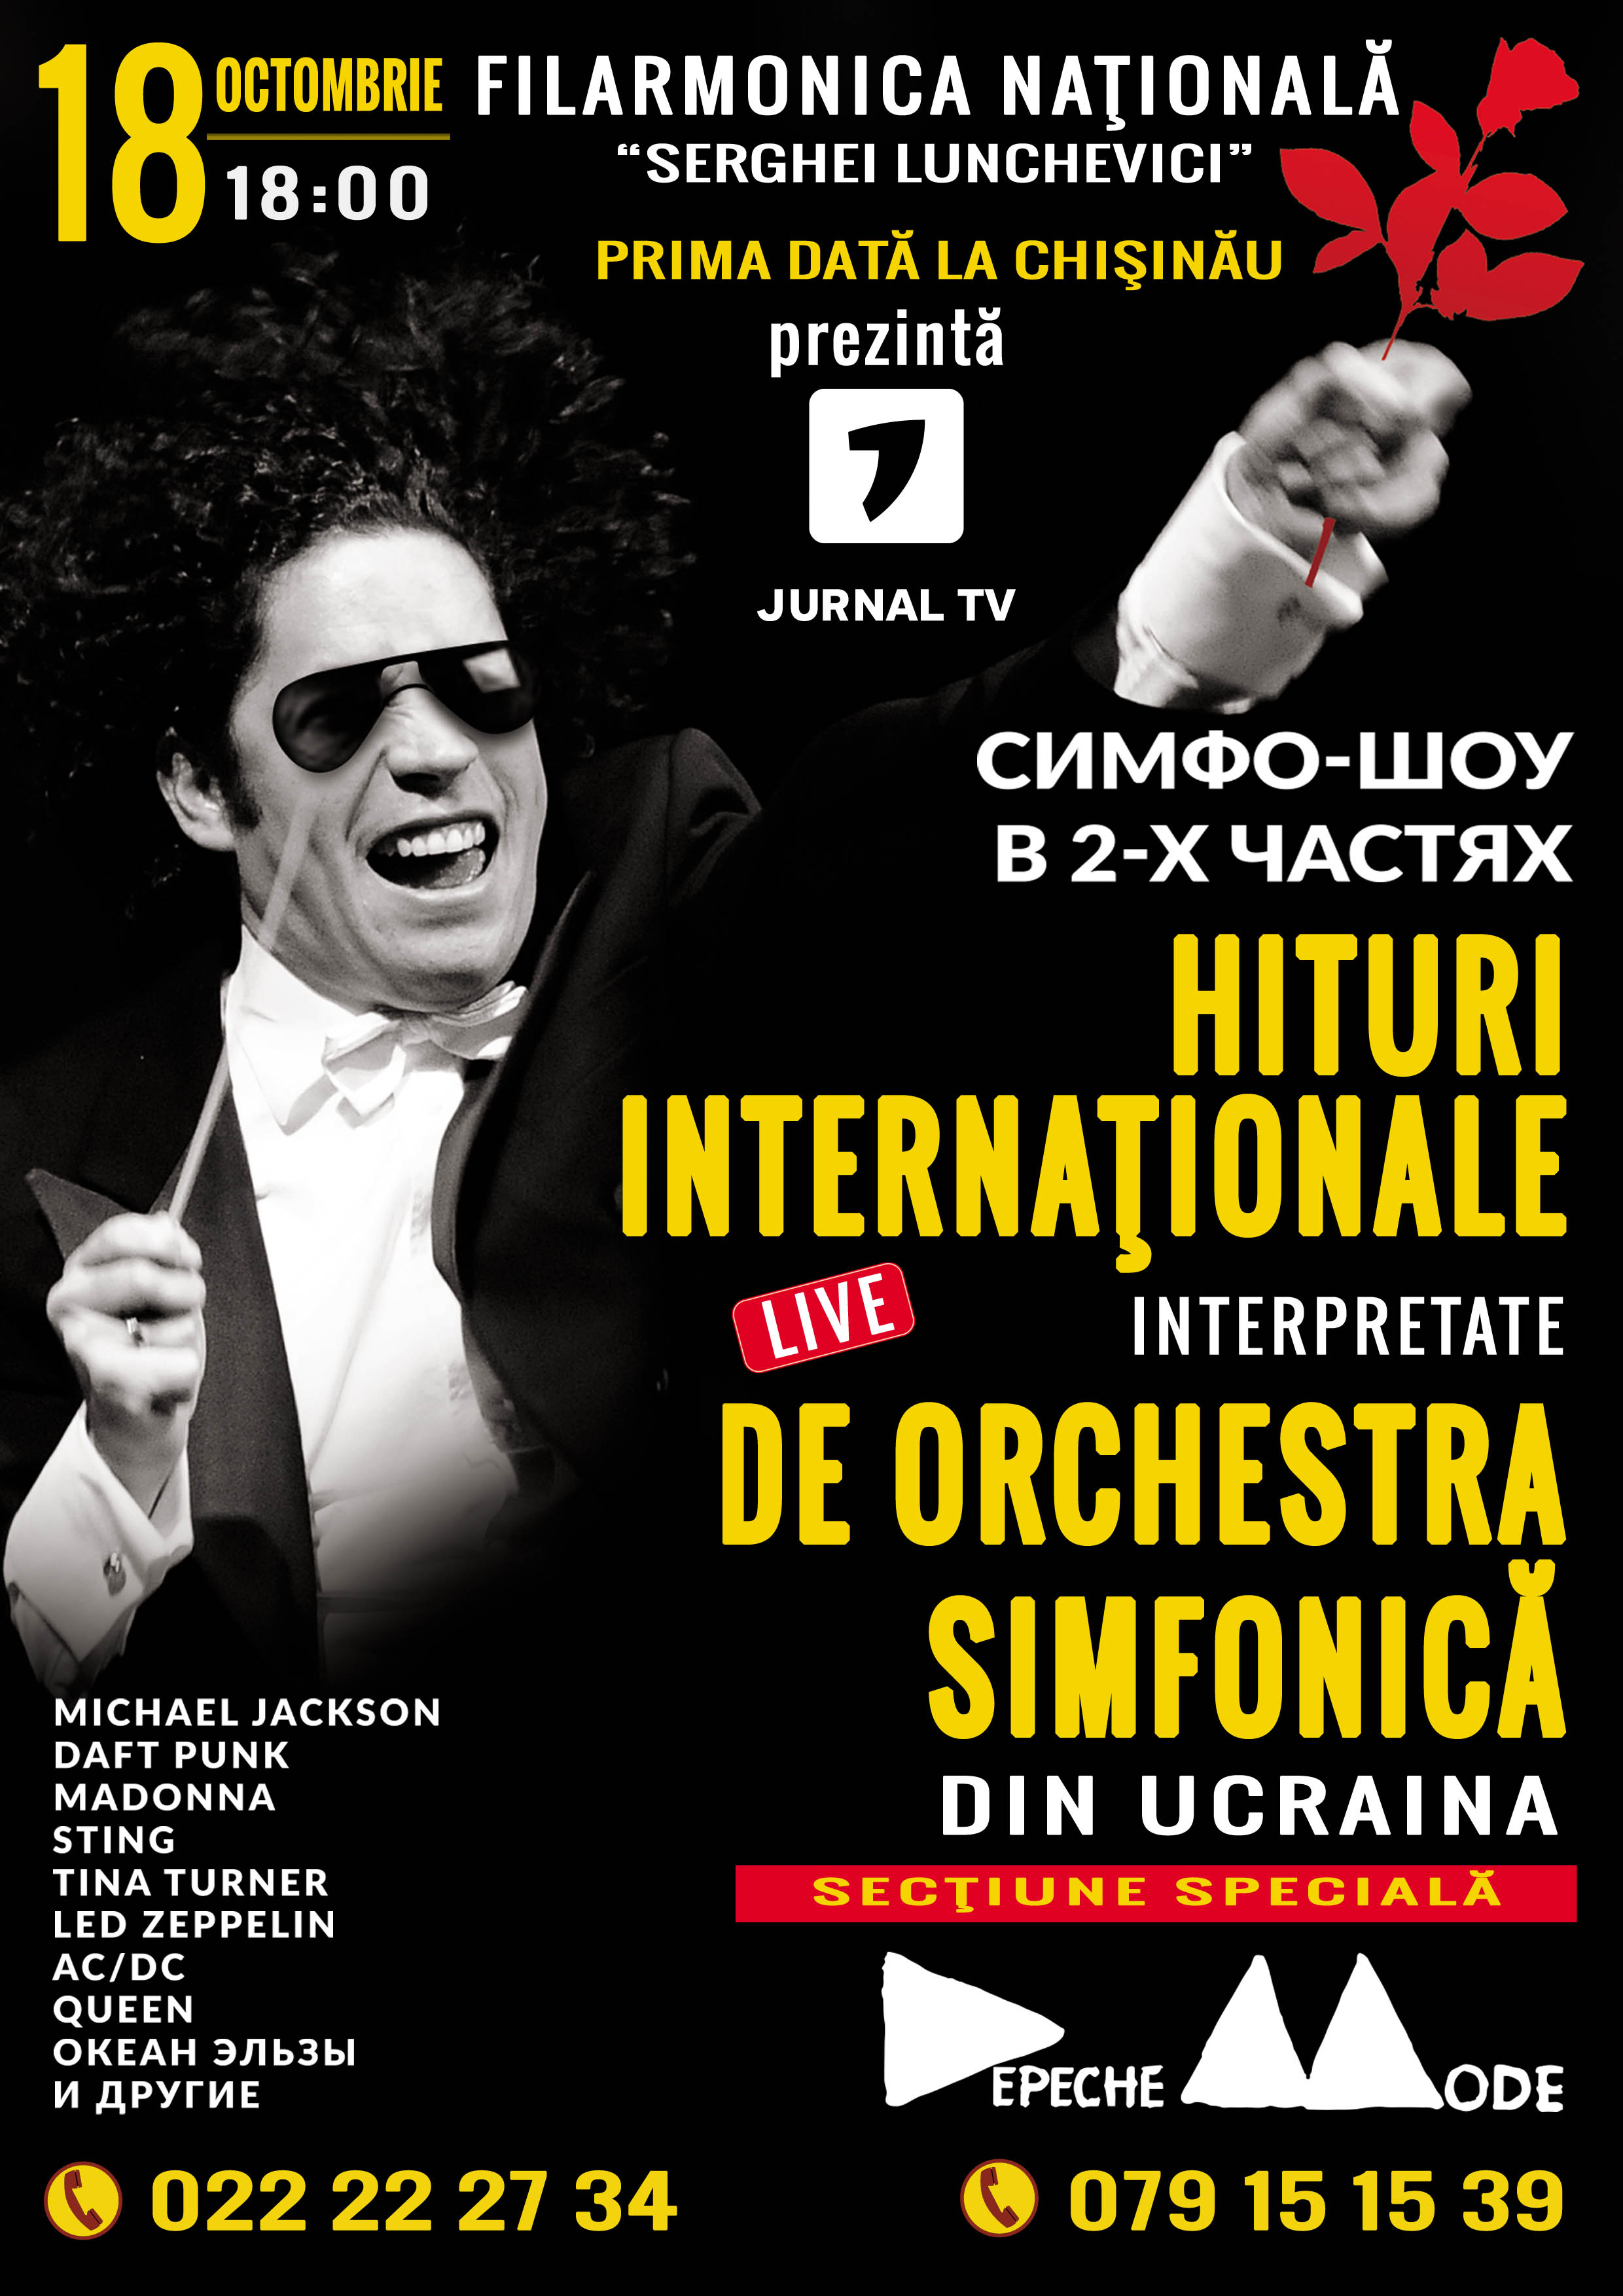 Hituri Internationale interpretate de Orchestra Simfonica din Ucraina